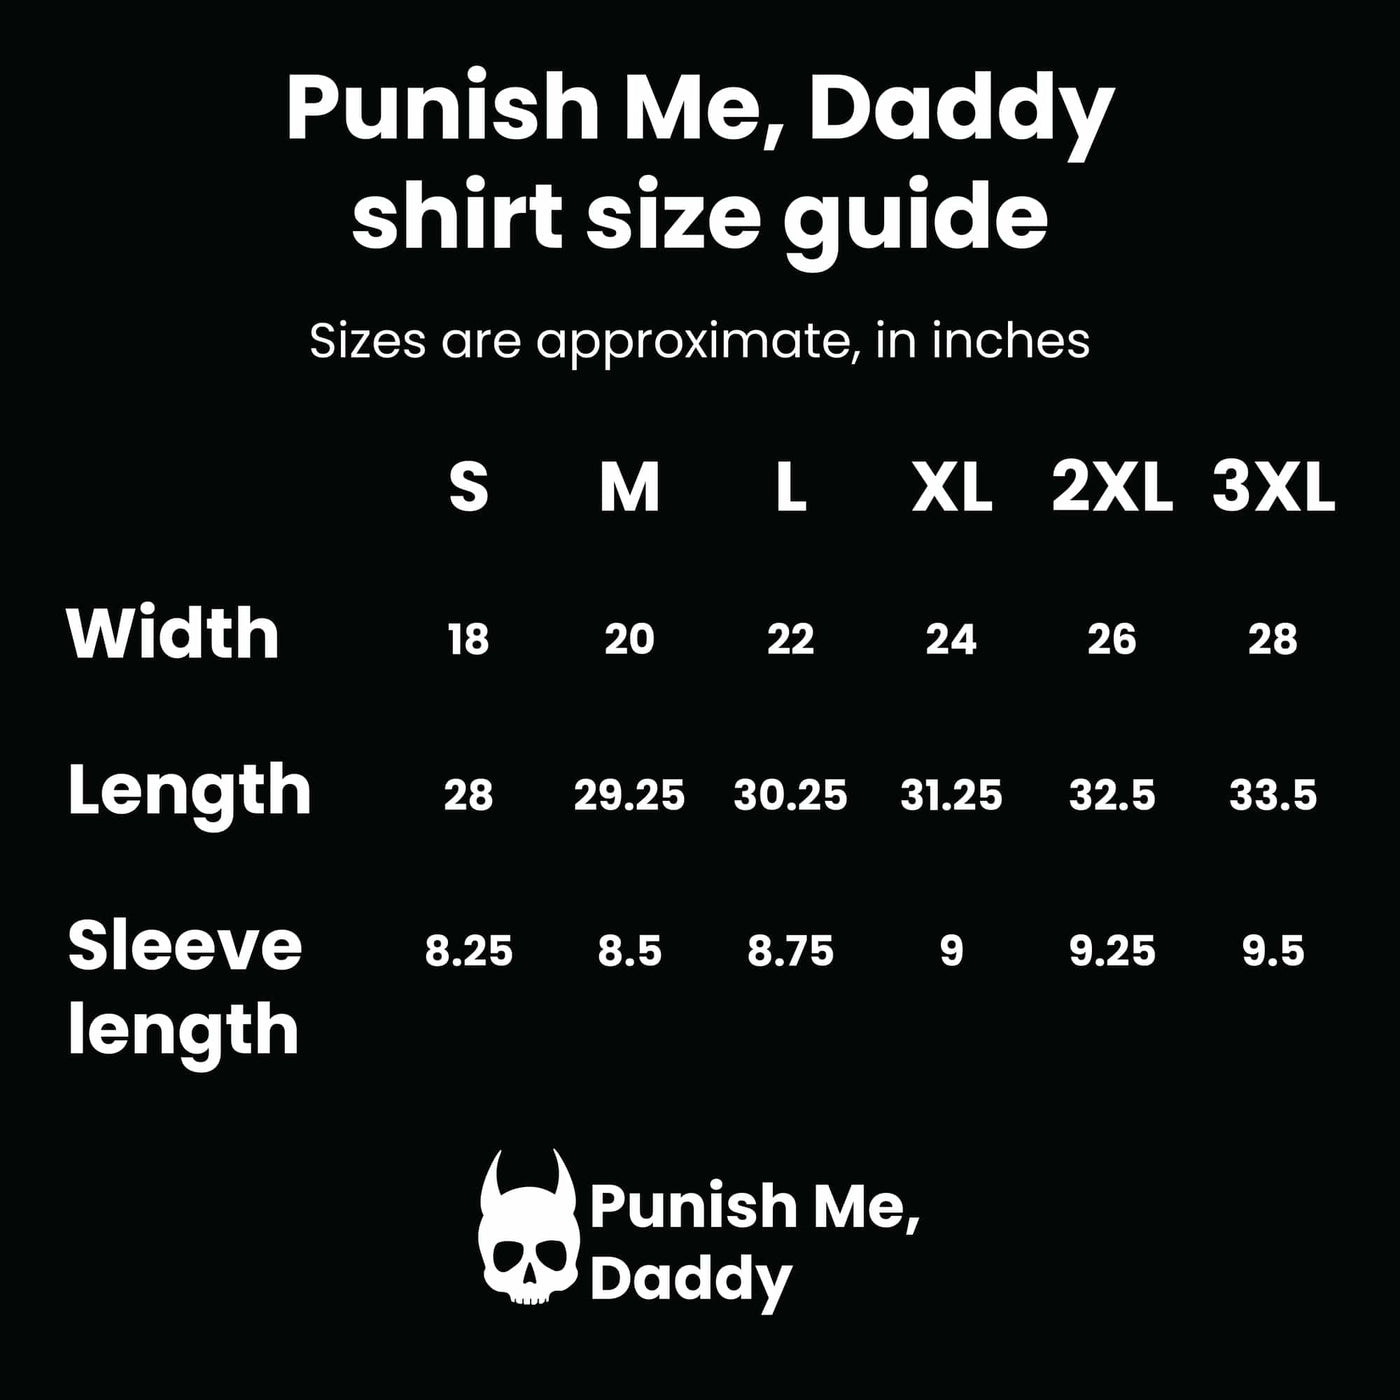 Harder Daddy T-Shirt